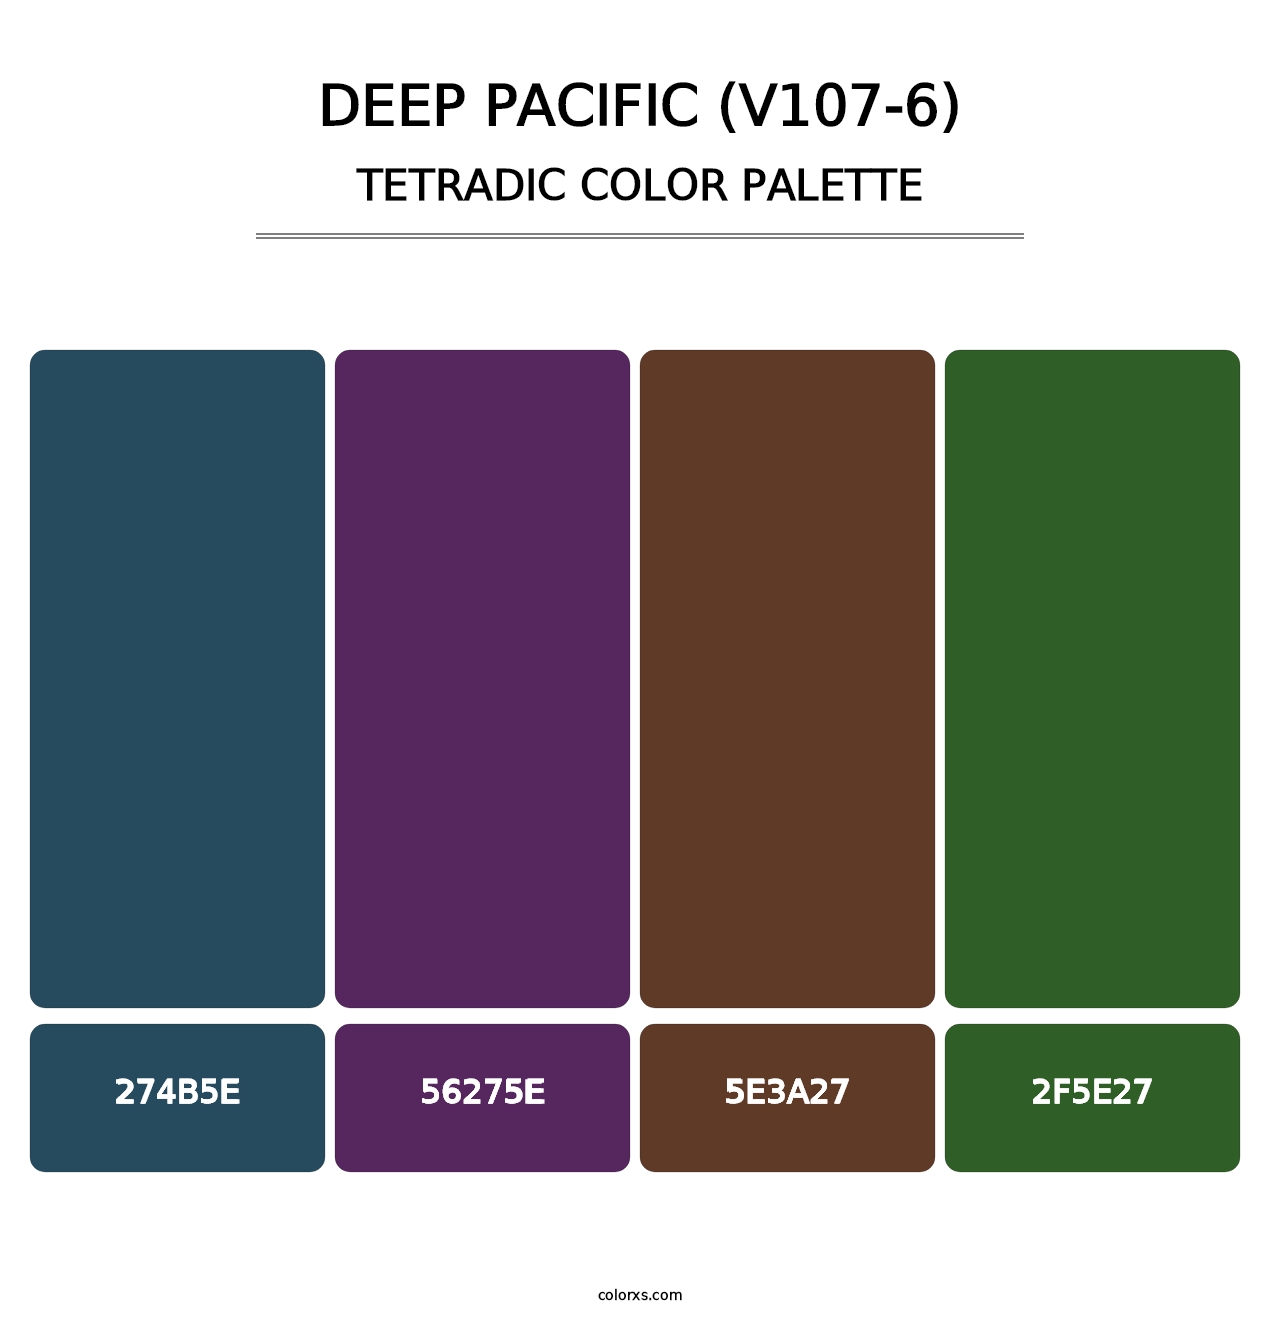 Deep Pacific (V107-6) - Tetradic Color Palette